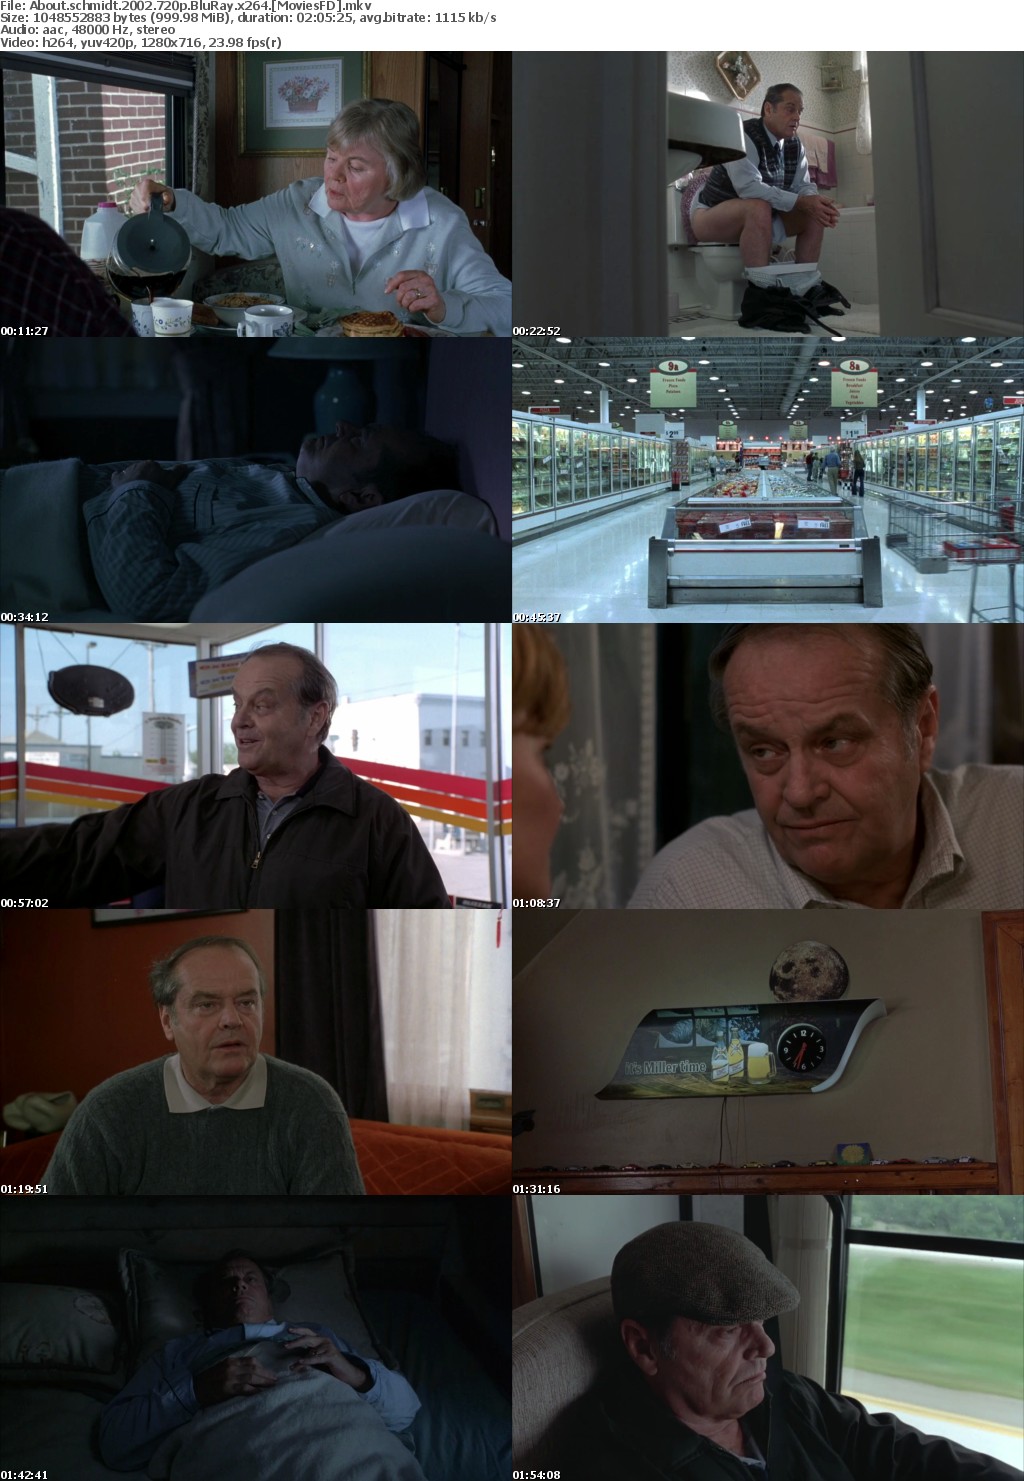 About Schmidt (2002) 720P Bluray X264 Moviesfd